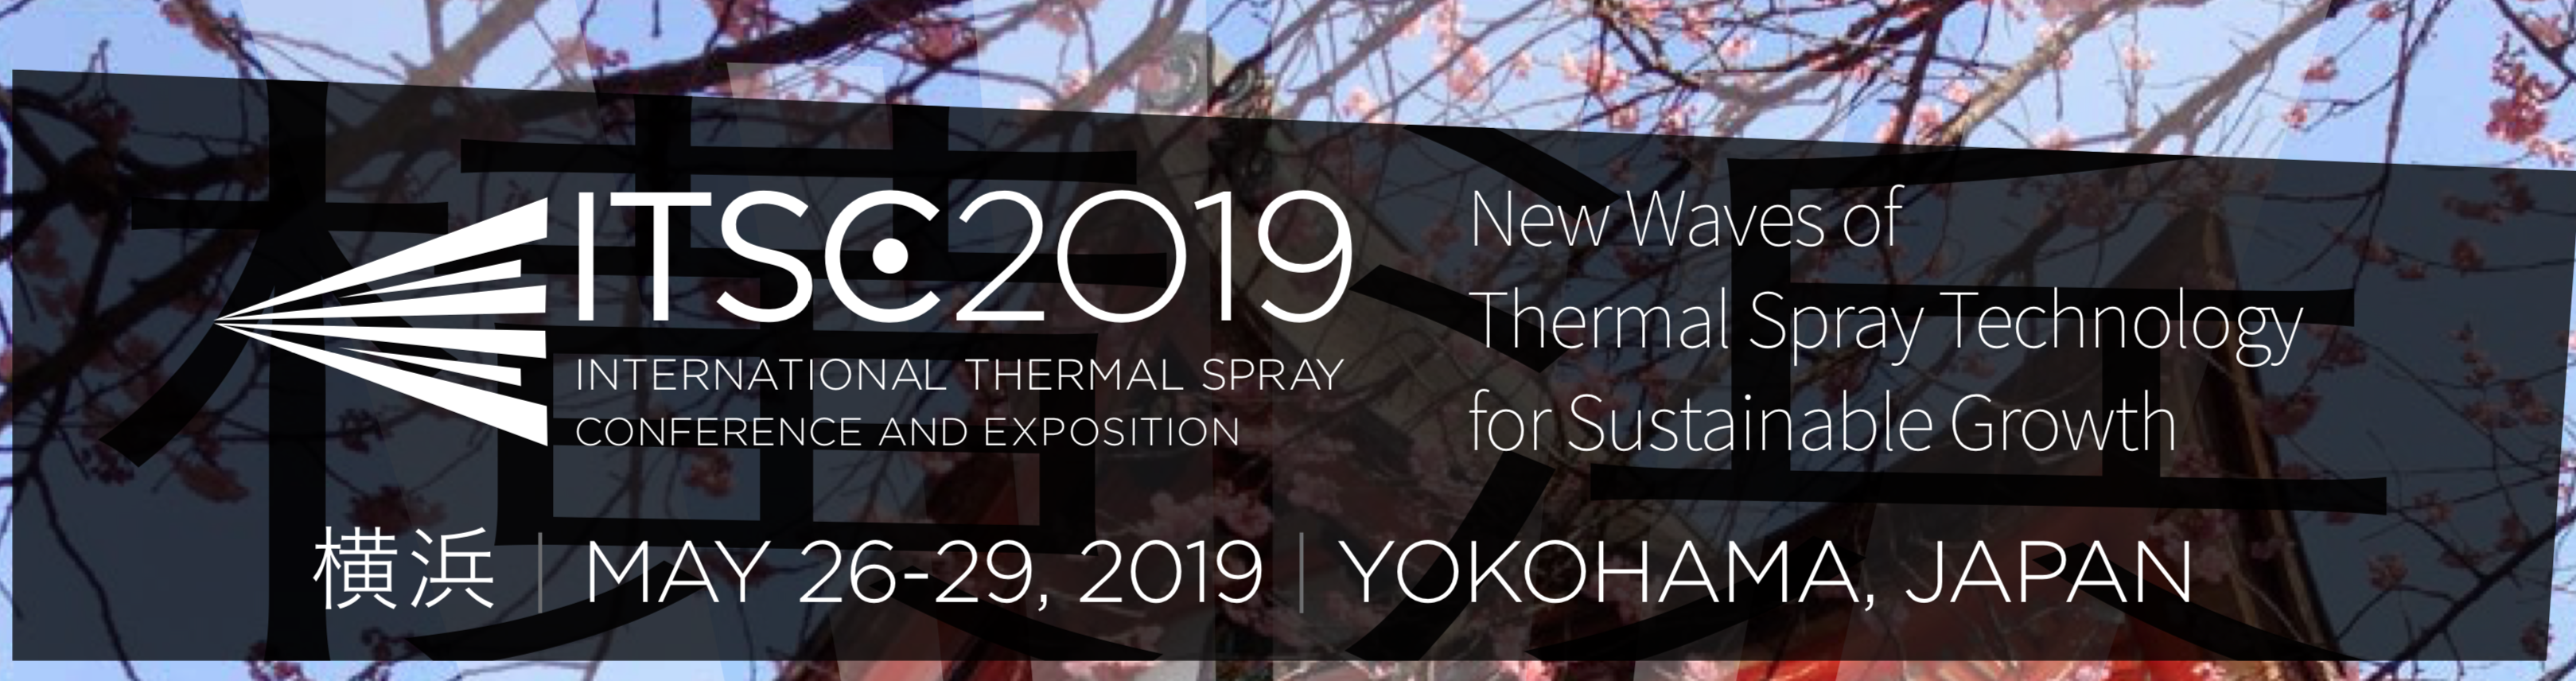 You are currently viewing IKH auf der ITSC 2019 Internationalen Konferenz in Yokohama, Japan